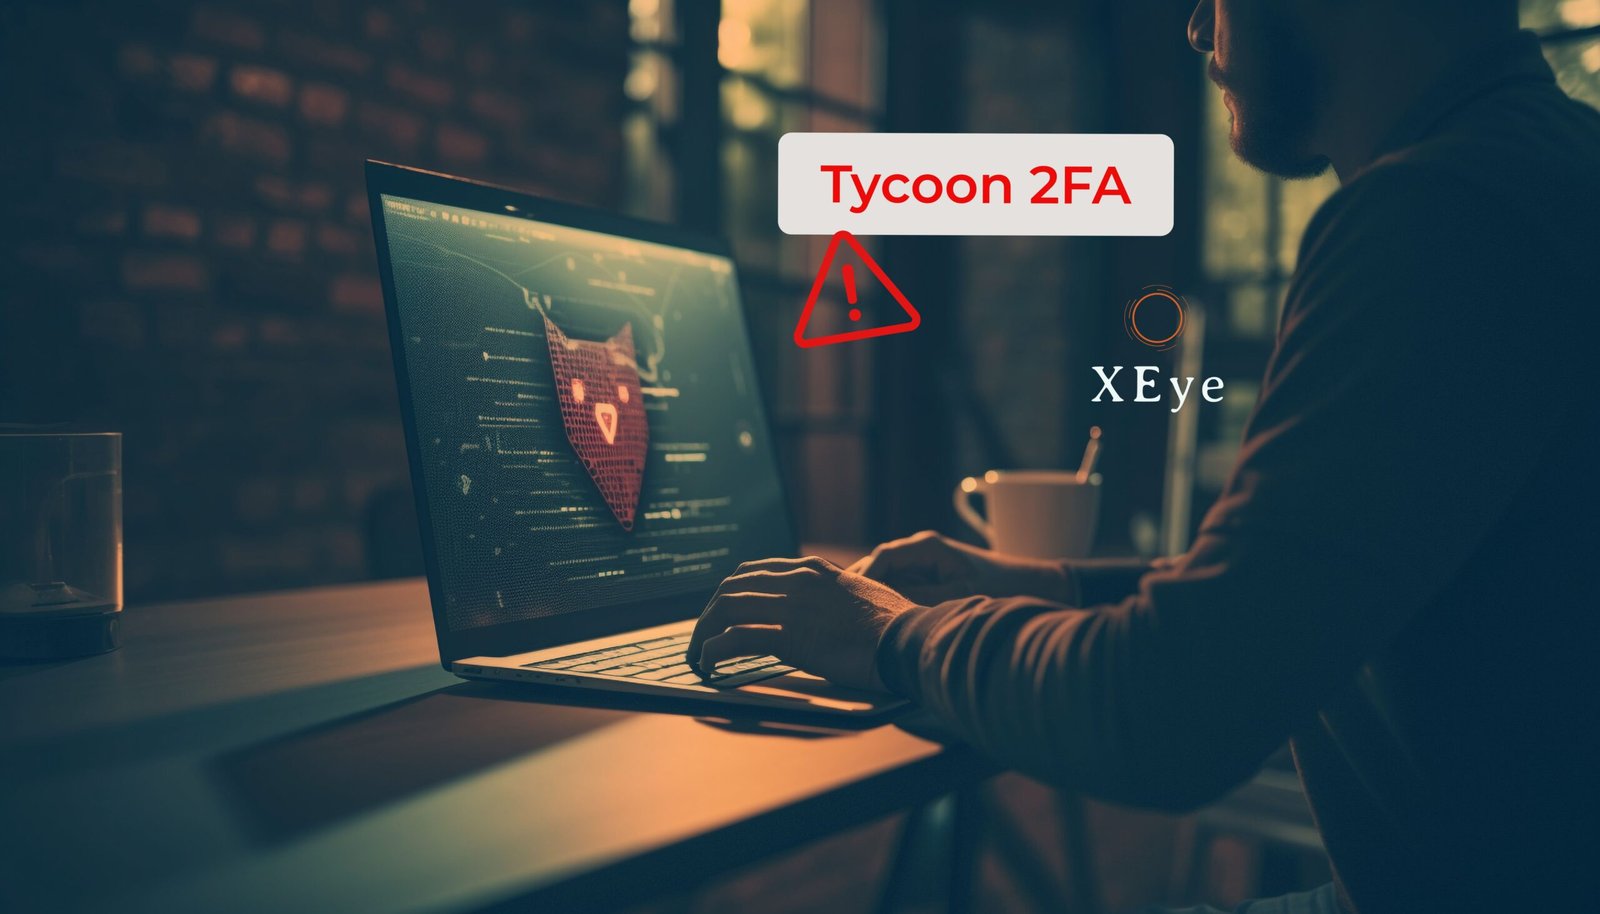 Tycoon 2FA Blog Post - XEye Security